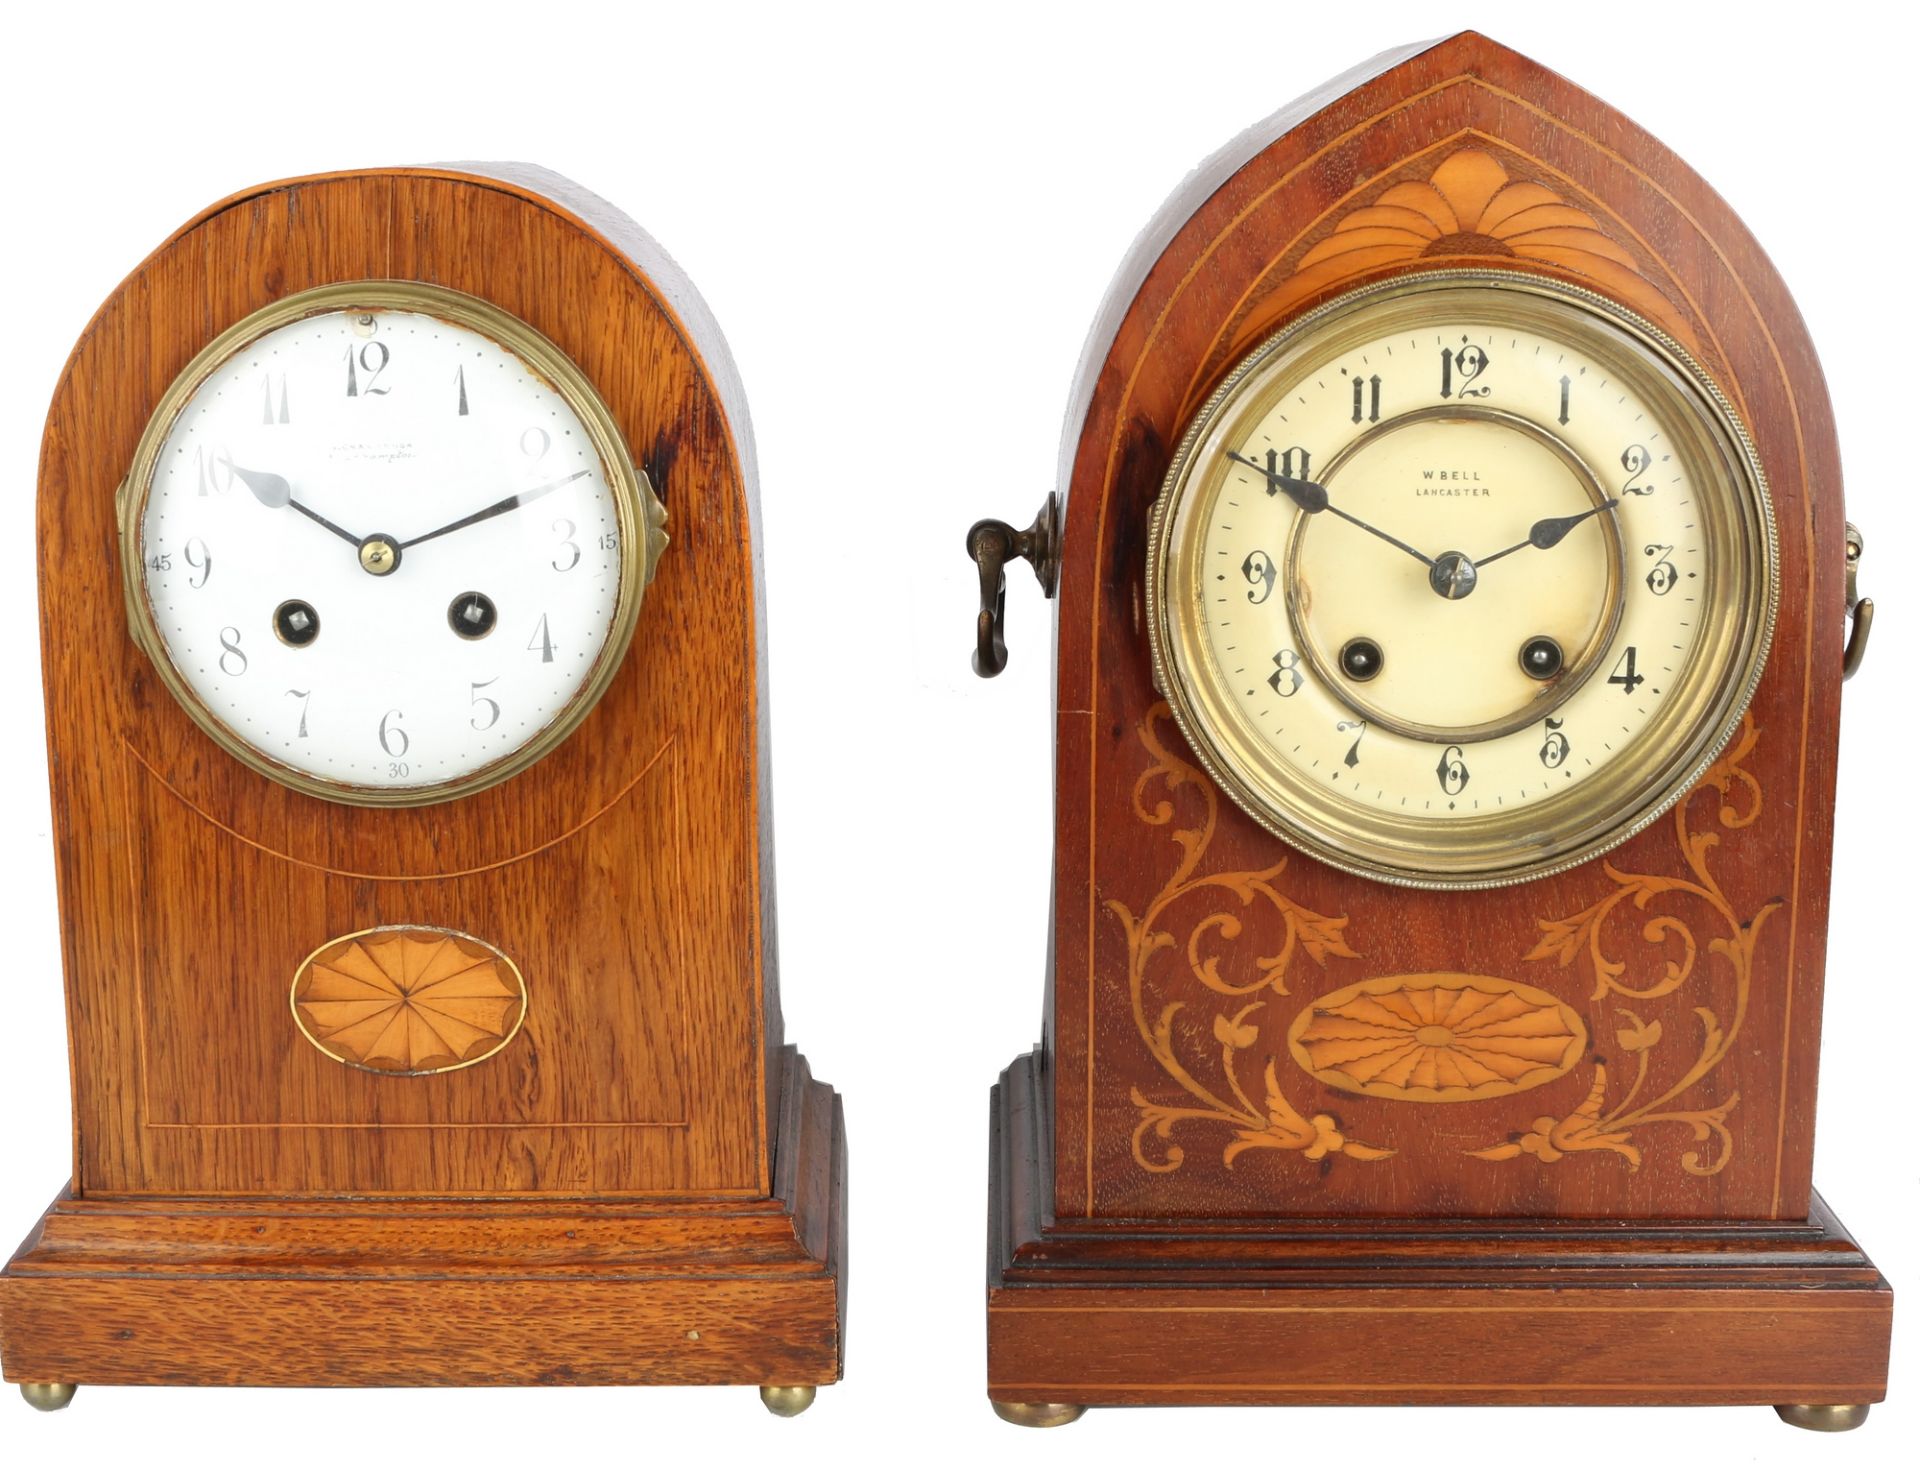 2 Stockuhren, England um 1900, bracket clocks,